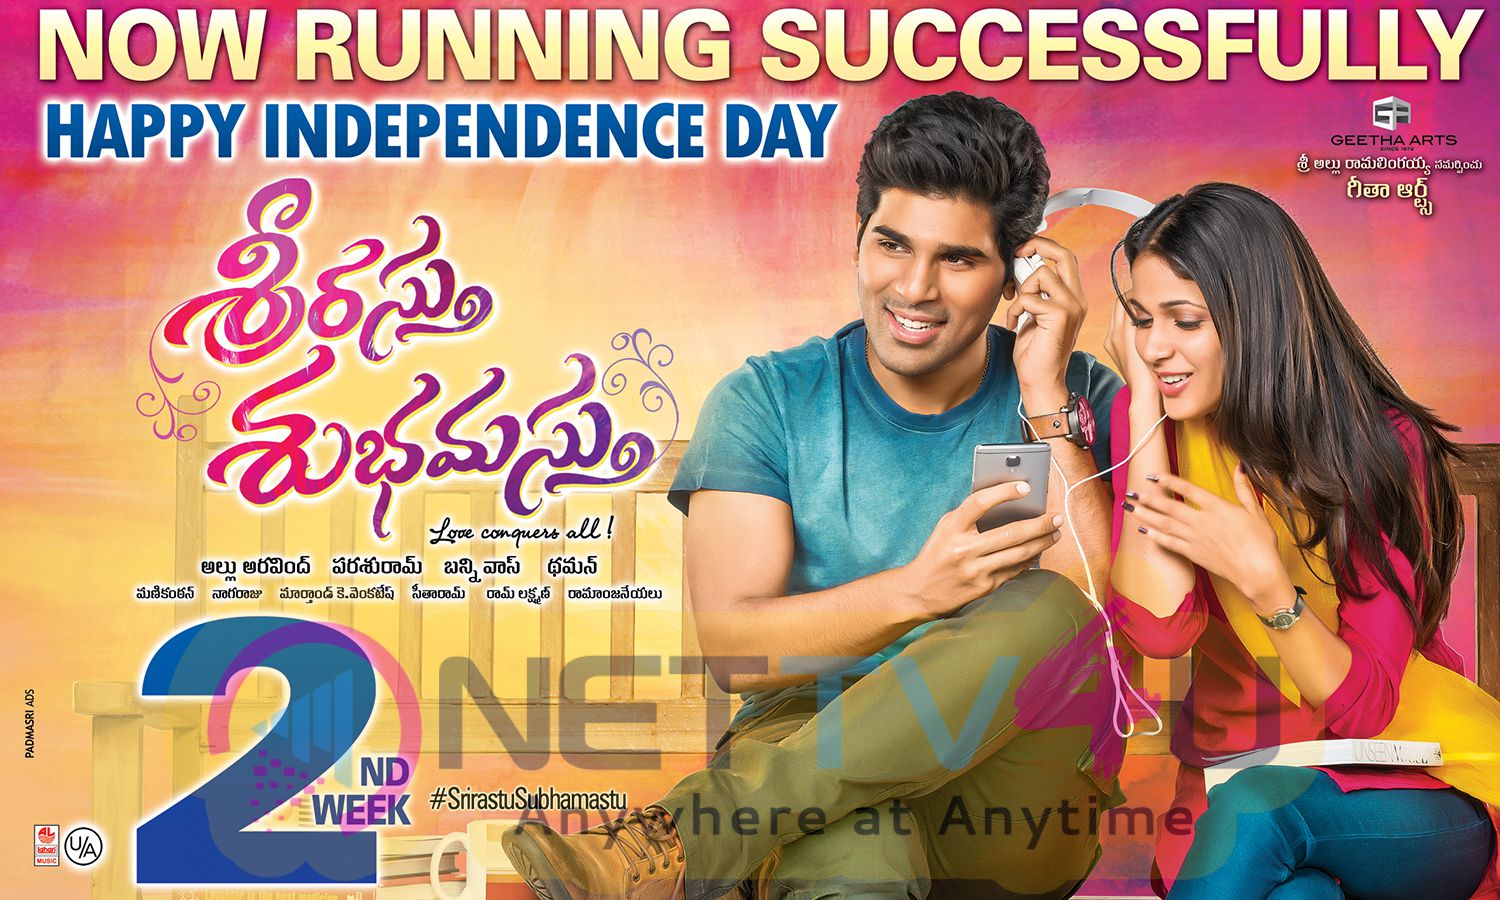 Srirastu Subhamastu Movie 2nd Week Posters Independence Day Special Telugu Gallery